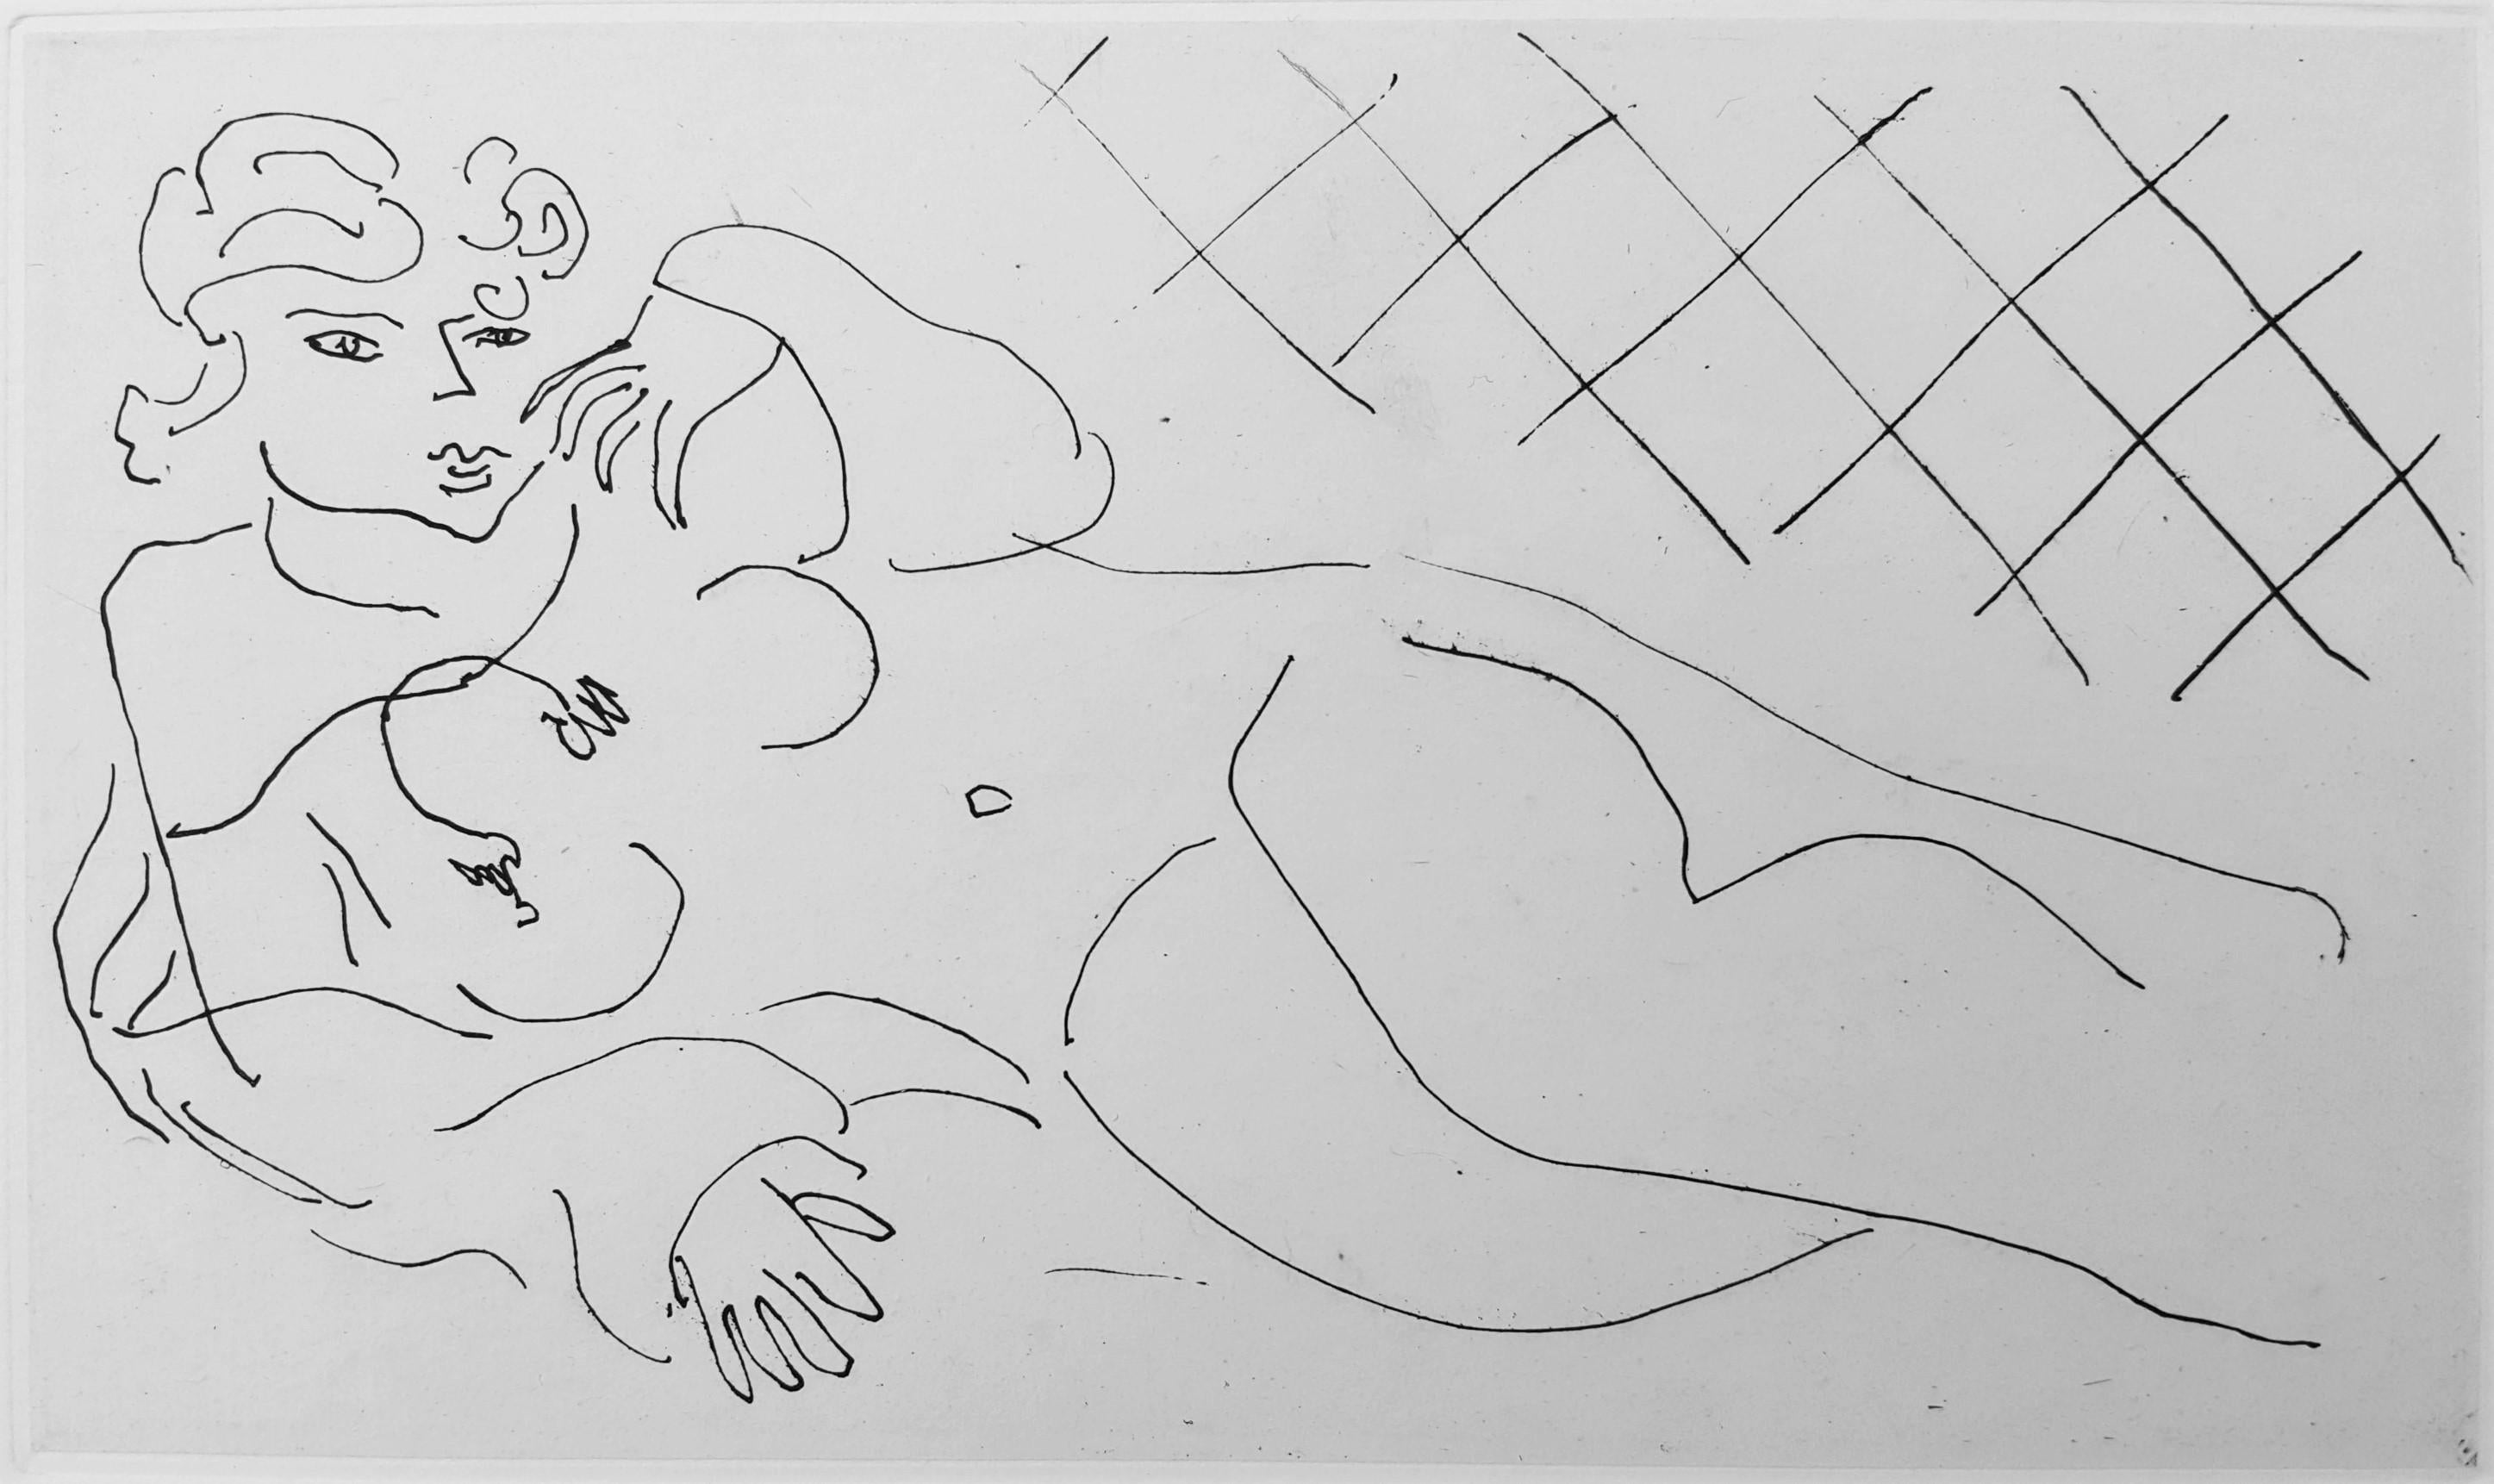 Henri Matisse Nude Print - Figure allongée devant un carrelage (Figure Lying in front of a Tiled Floor)